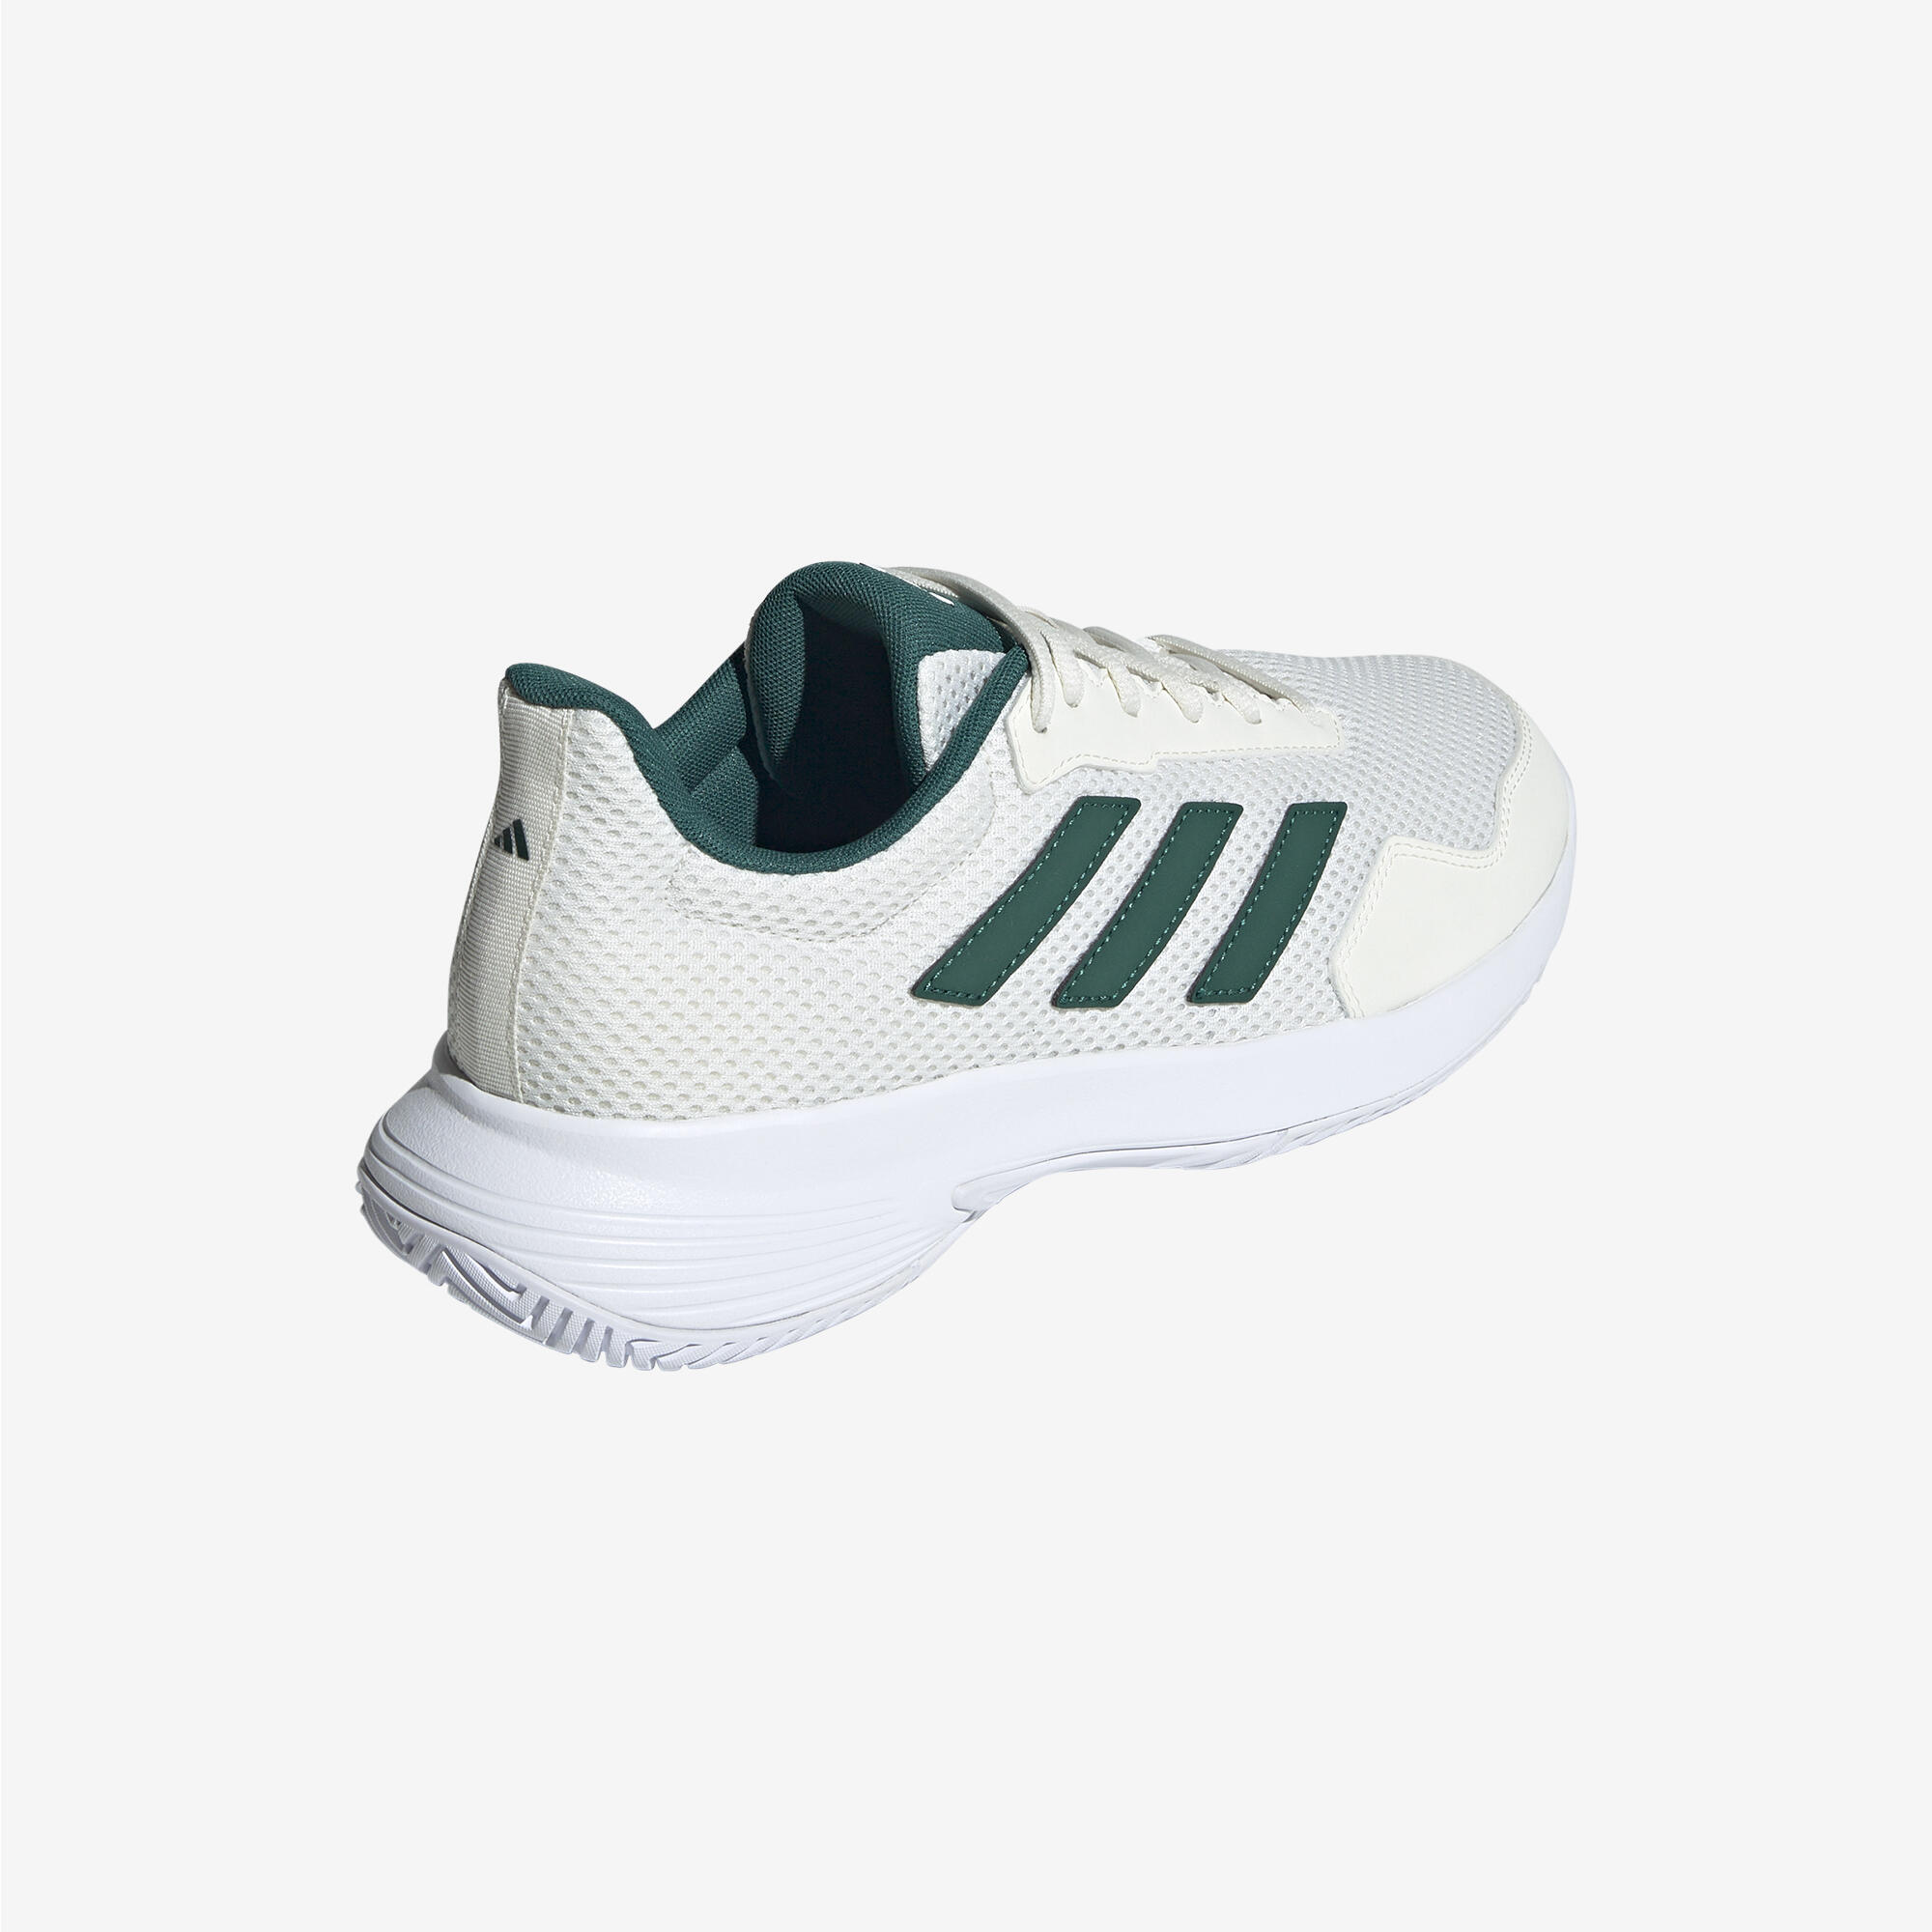 Men's Multicourt Tennis Shoes Gamespec - White/Green 4/7